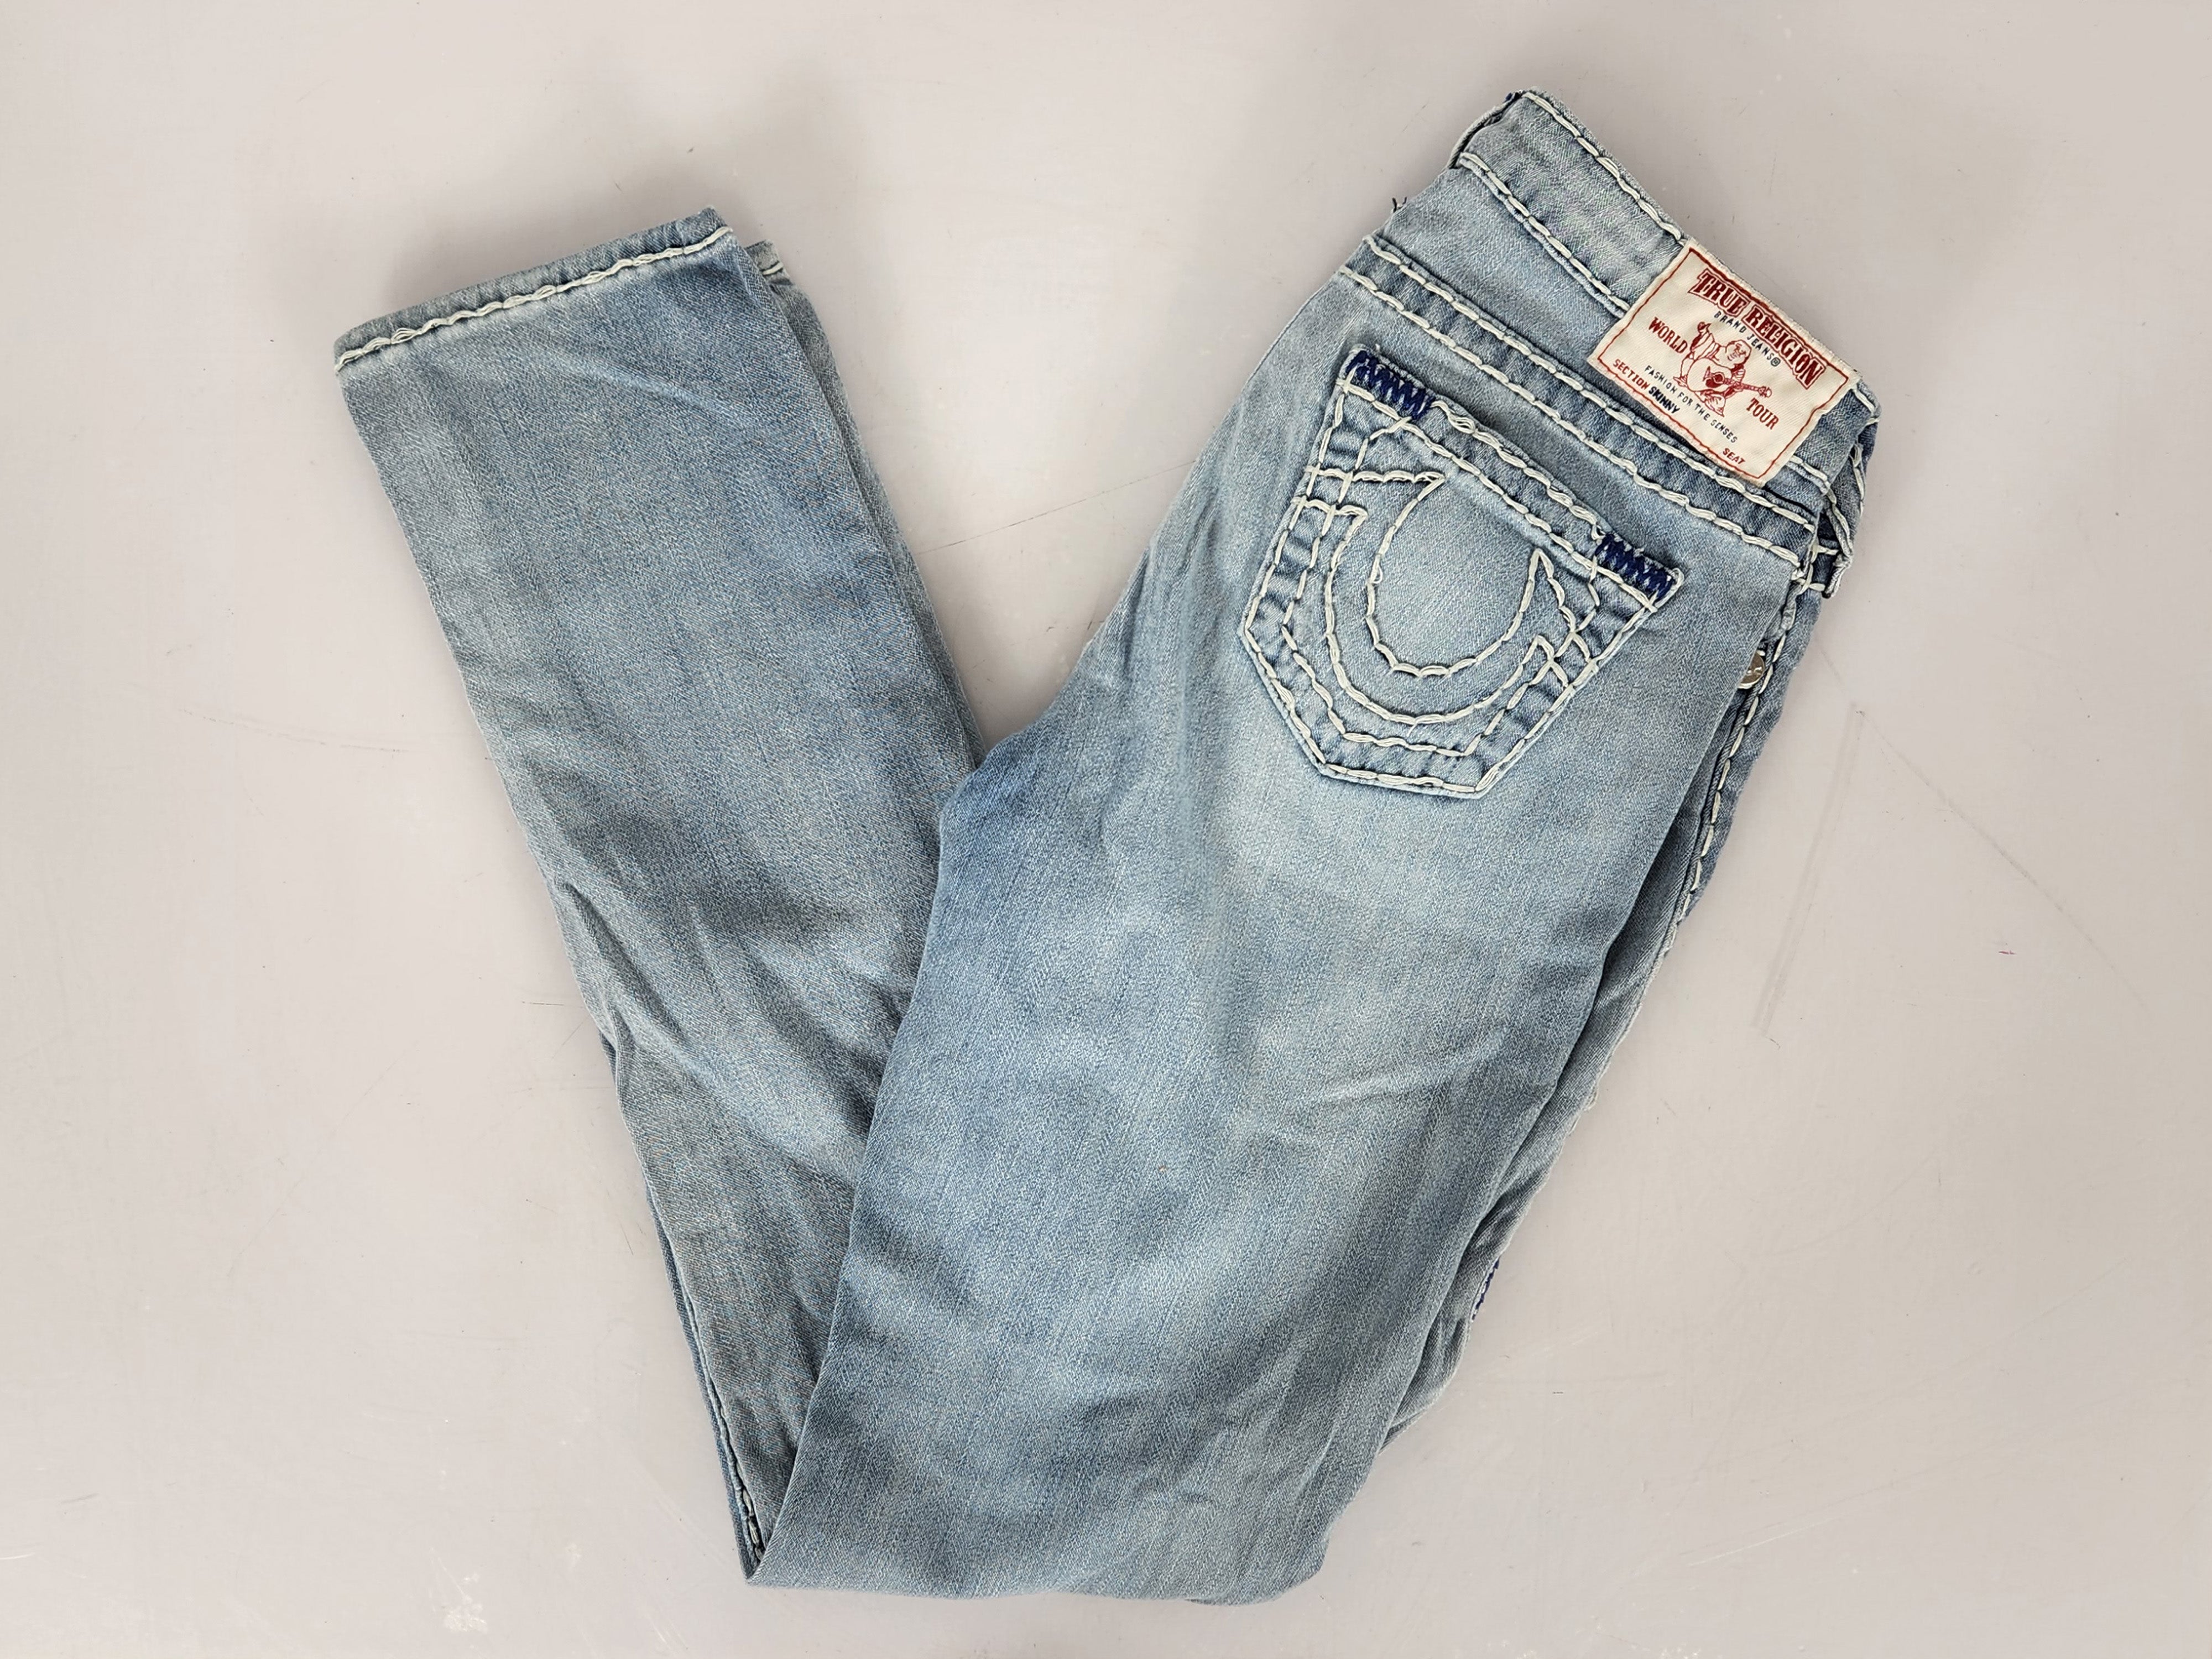 Vintage true religion jeans #vintage #truereligion - Depop